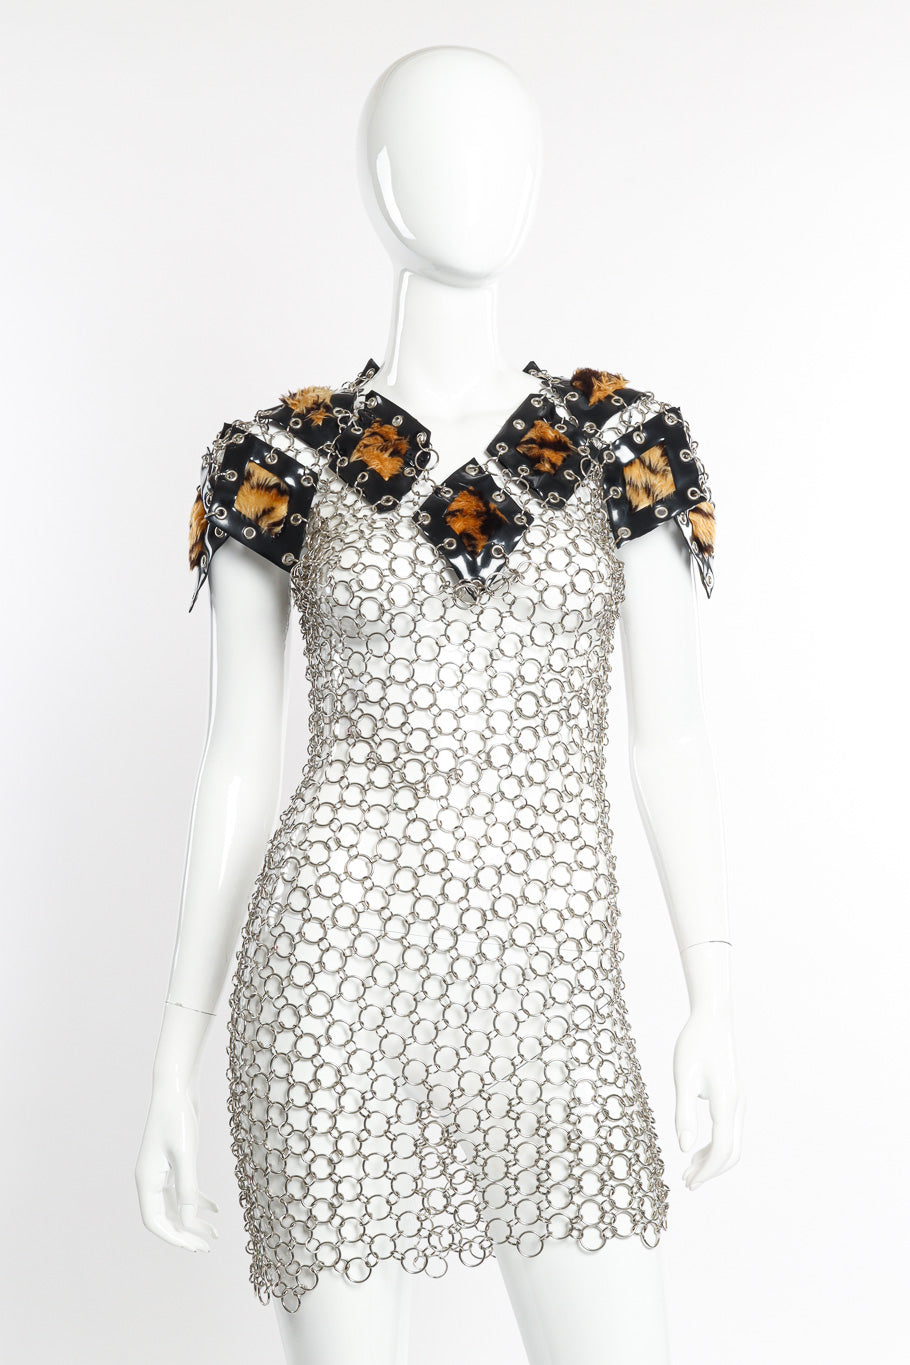 Faux Fur Chainmail Dress on mannequin @recessla